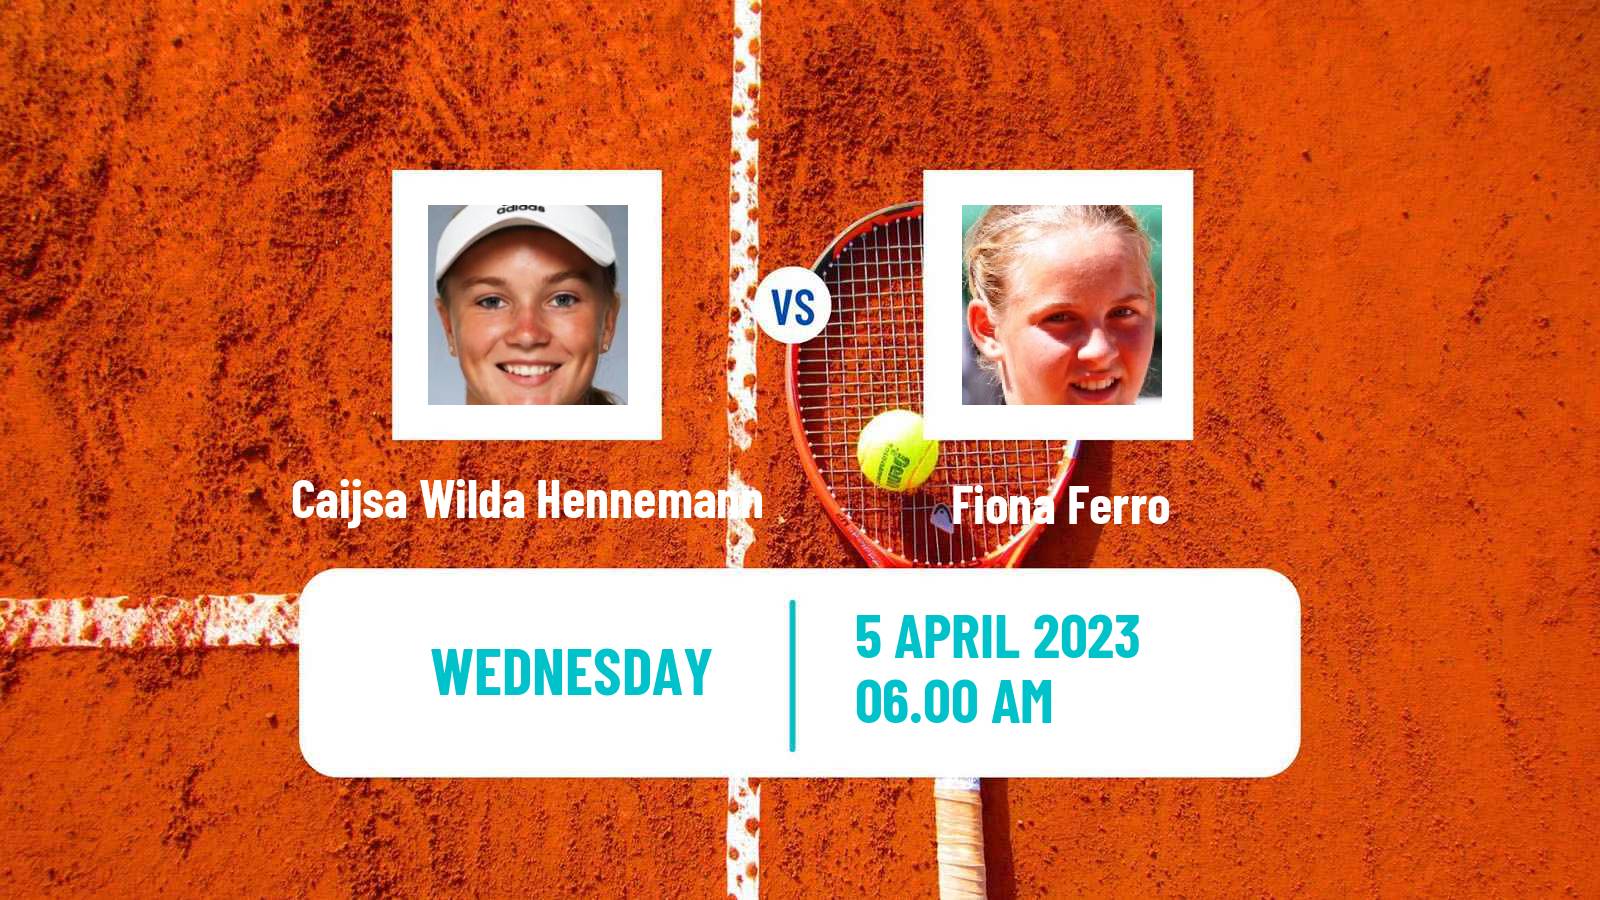 Tennis ITF Tournaments Caijsa Wilda Hennemann - Fiona Ferro